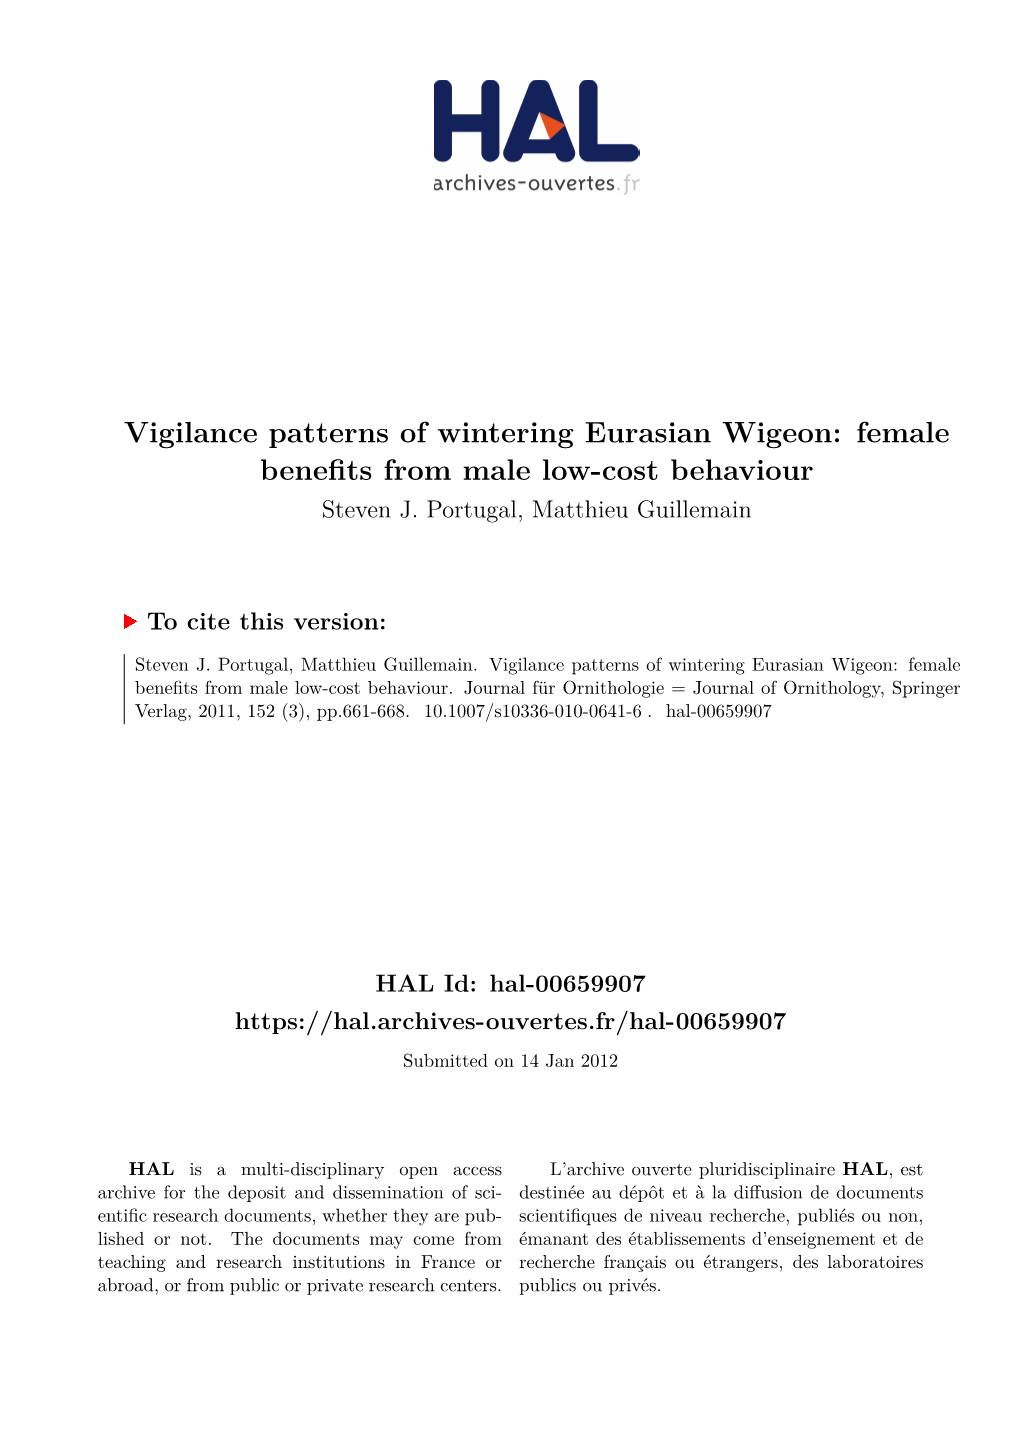 Vigilance Patterns of Wintering Eurasian Wigeon: Female Benefits from Male Low-Cost Behaviour Steven J